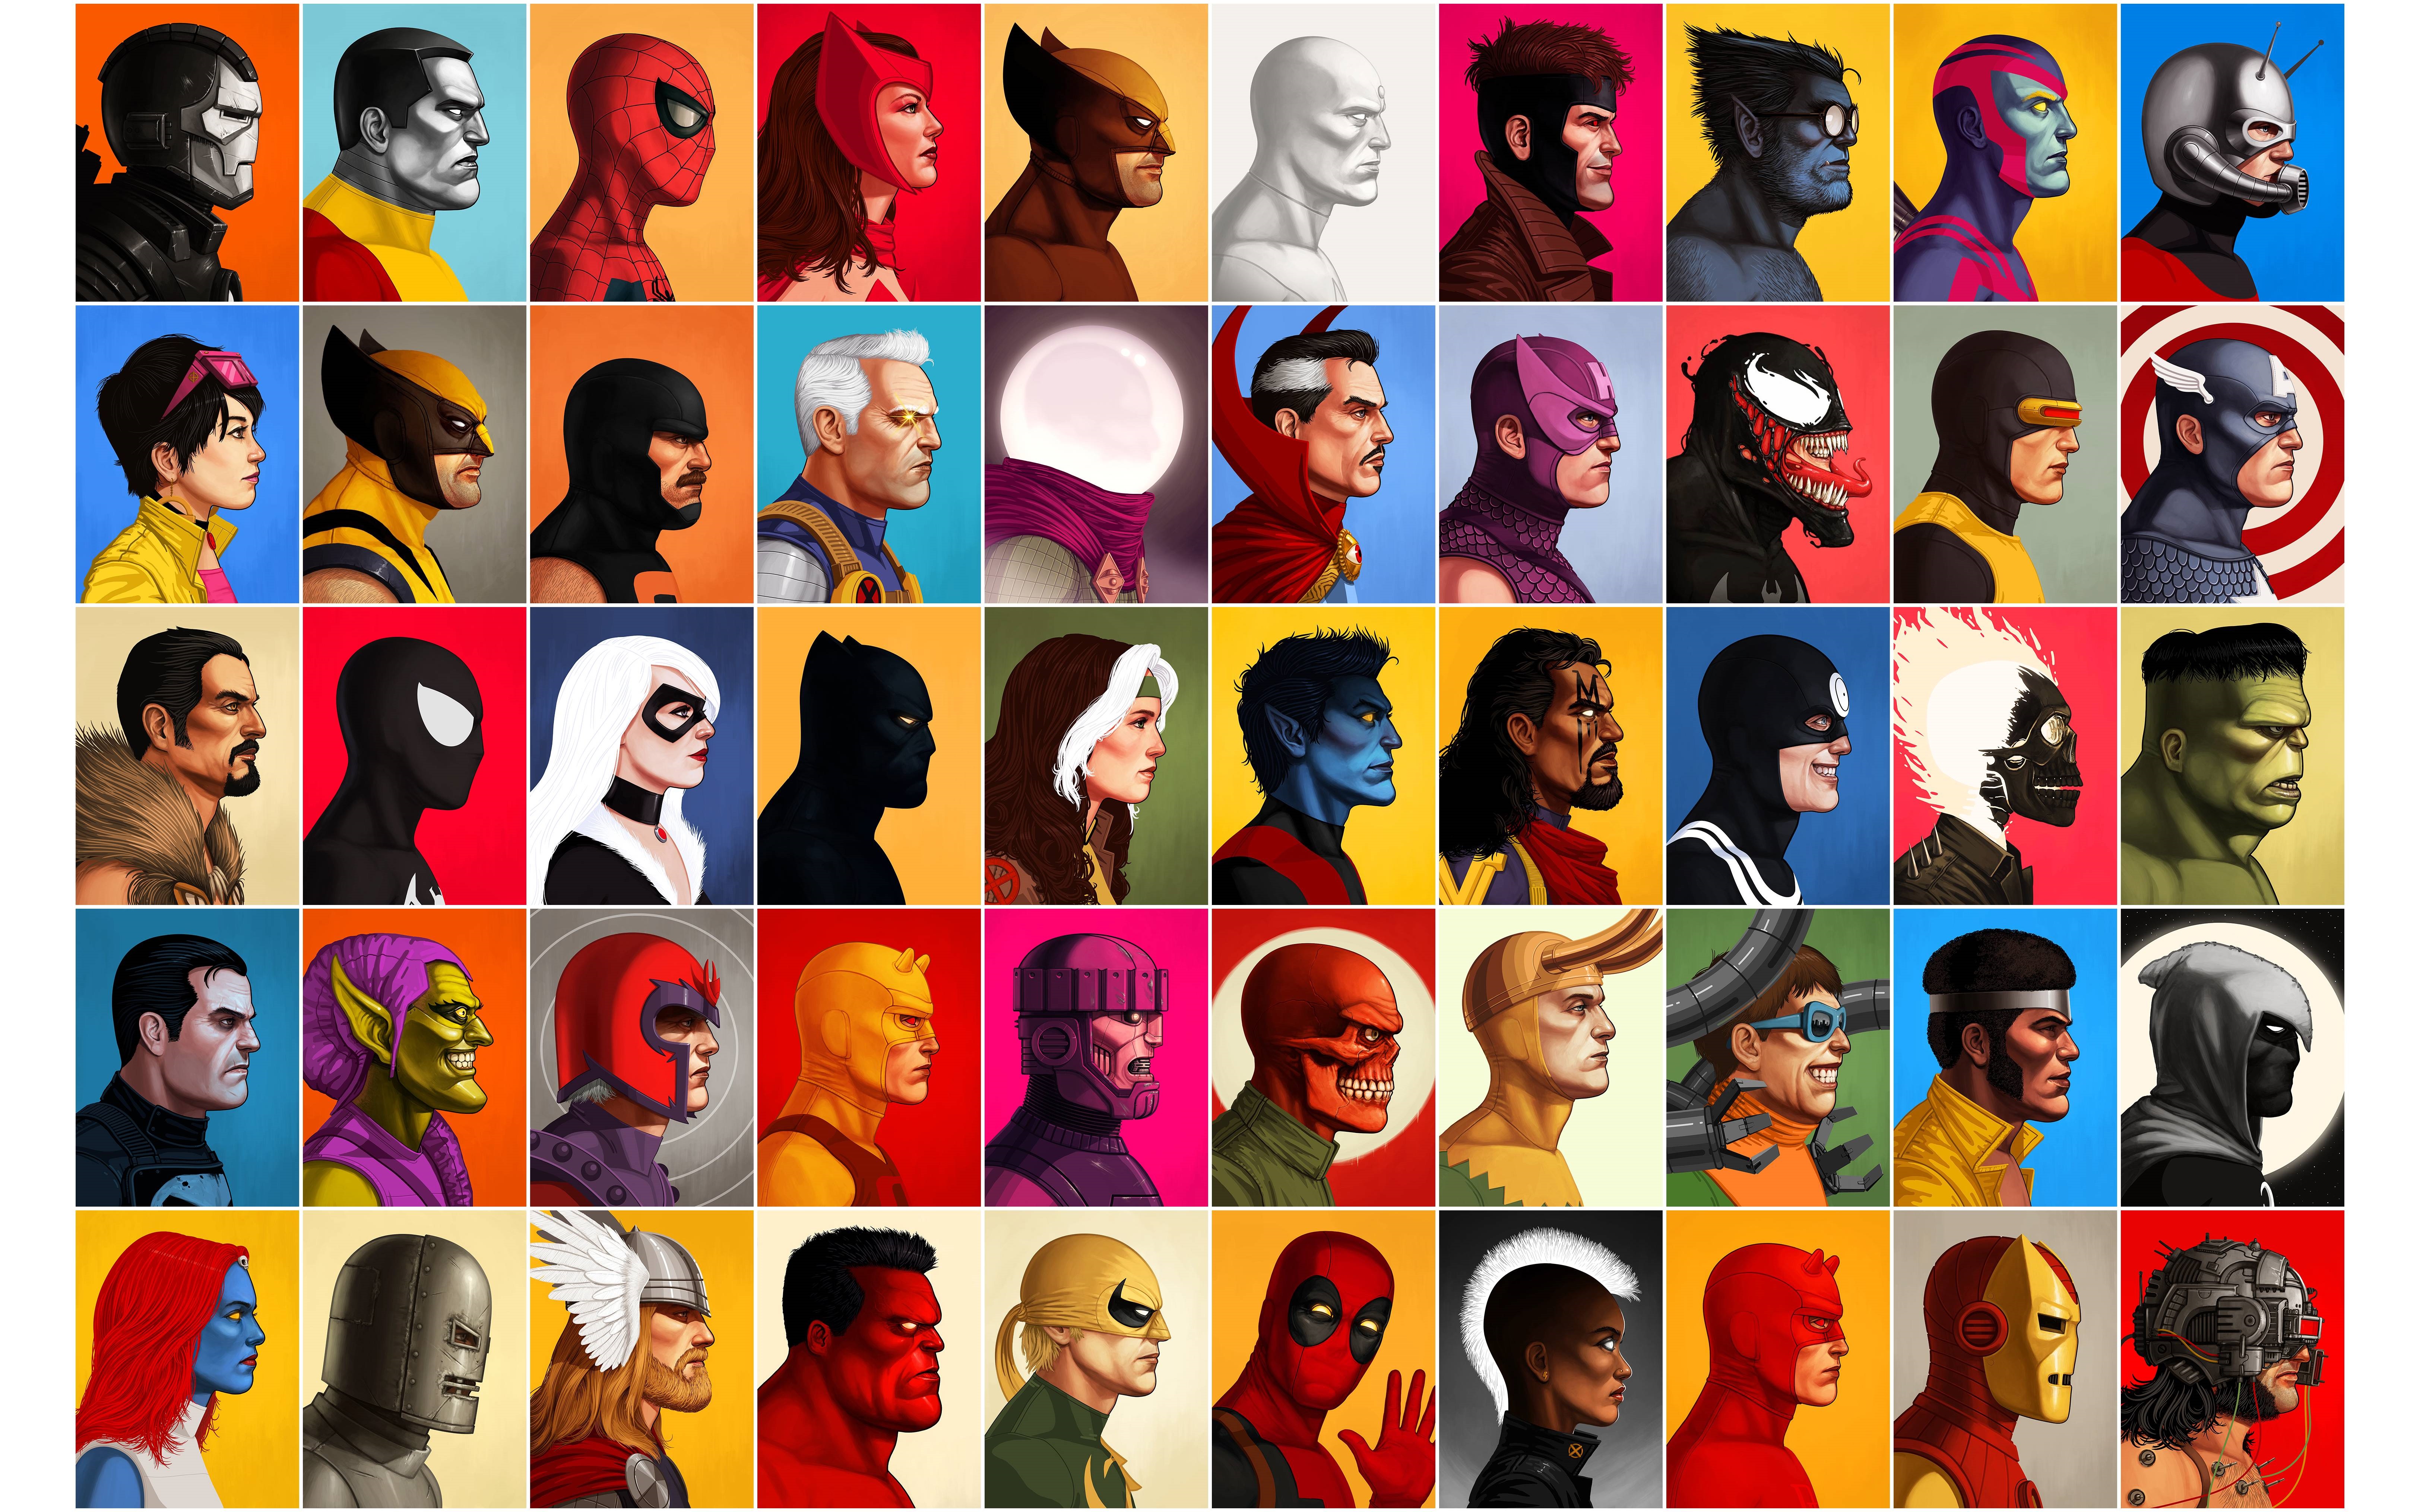 deadpool, daredevil, spider man, hulk, bullseye (marvel comics), cable (marvel comics), puck (marvel comics), wolverine, collage, archangel (marvel comics), loki (marvel comics), scarlet witch, black panther (marvel comics), comics, ant man, beast (marvel comics), black cat (marvel comics), captain america, clint barton, colossus, cyclops (marvel comics), doctor octopus, doctor strange, galactus, gambit (marvel comics), green goblin, hawkeye, iron fist (marvel comics), iron man, jubilee (marvel comics), magneto (marvel comics), moon knight, mystique (marvel comics), nightcrawler (marvel comics), punisher, red hulk, red skull (marvel comics), rogue (marvel comics), silver surfer, storm (marvel comics), thor, venom, war machine, weapon x (marvel comics)